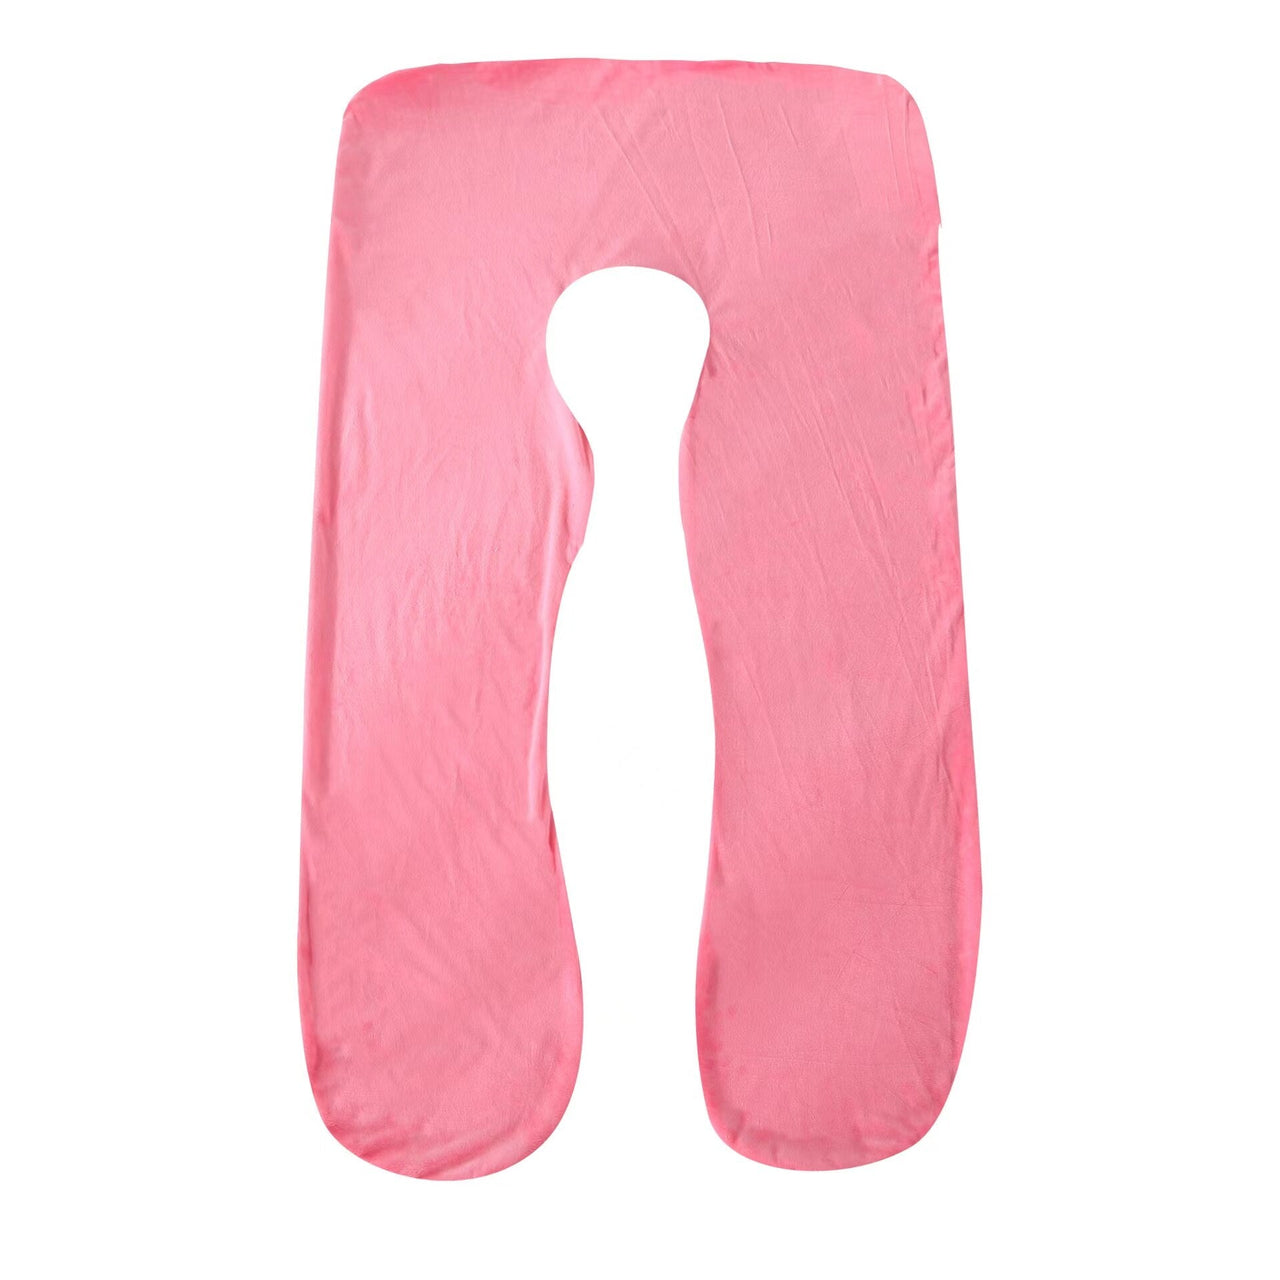 U - Shaped Pregnancy Pillow - Casatrail.com